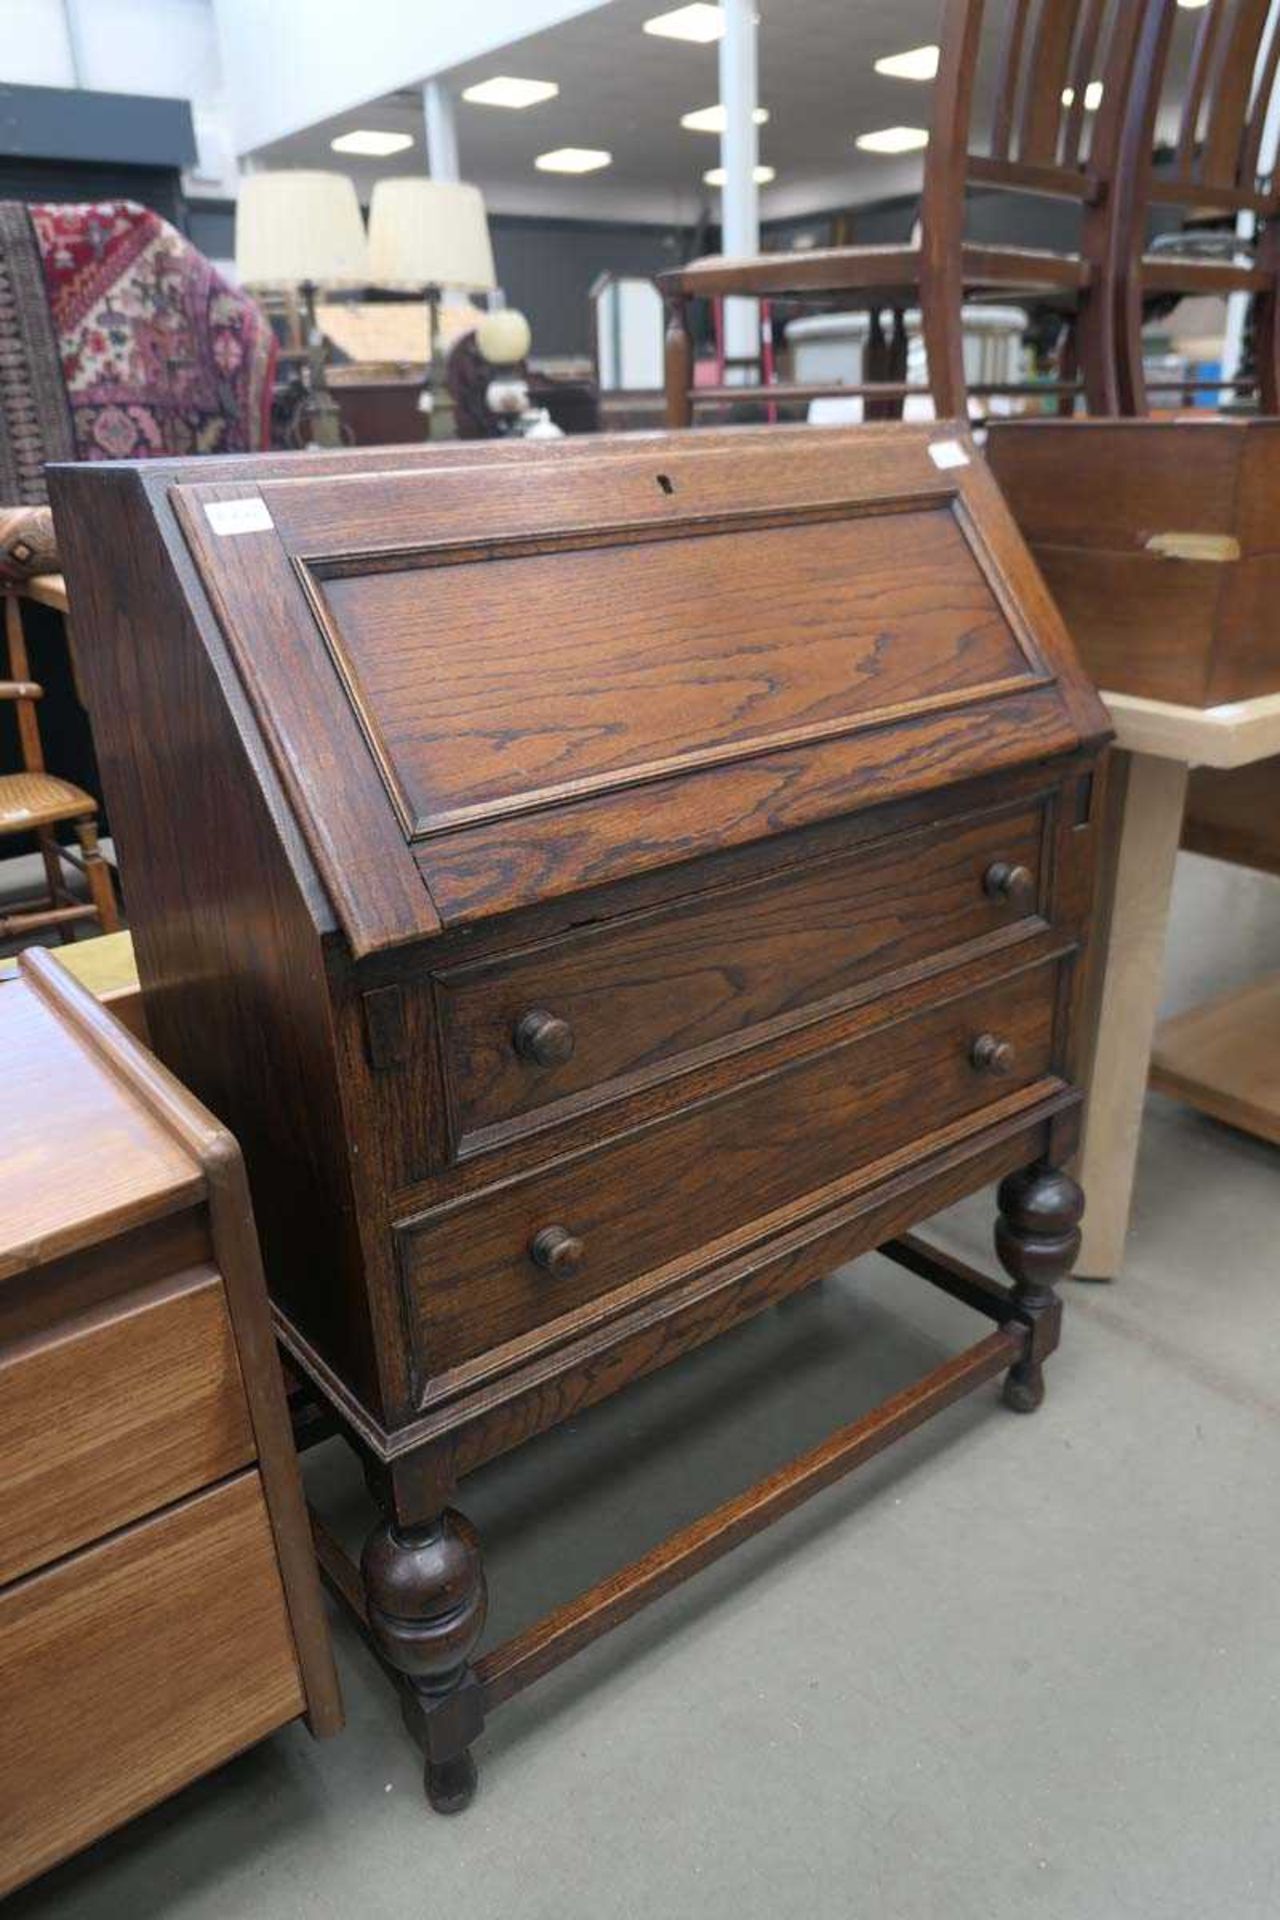 Oak bureau with 2 drawers under